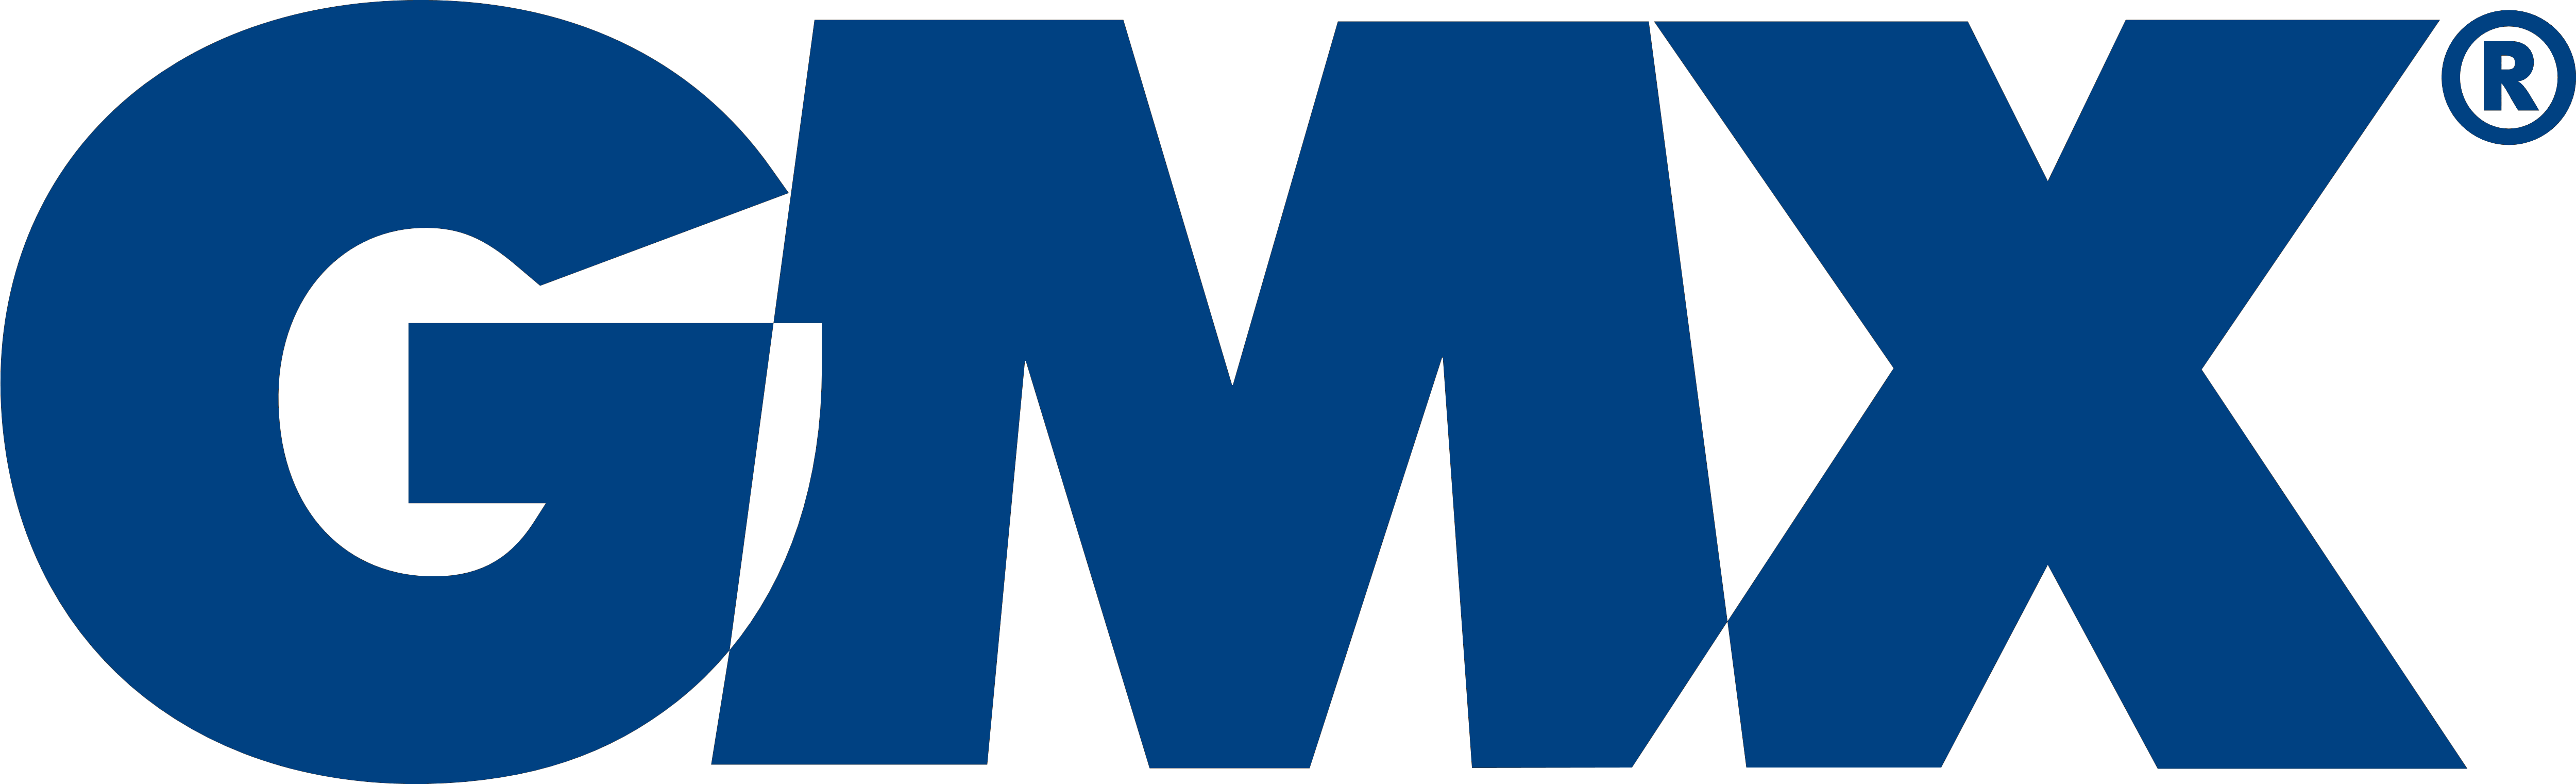 GMX – Logos Download